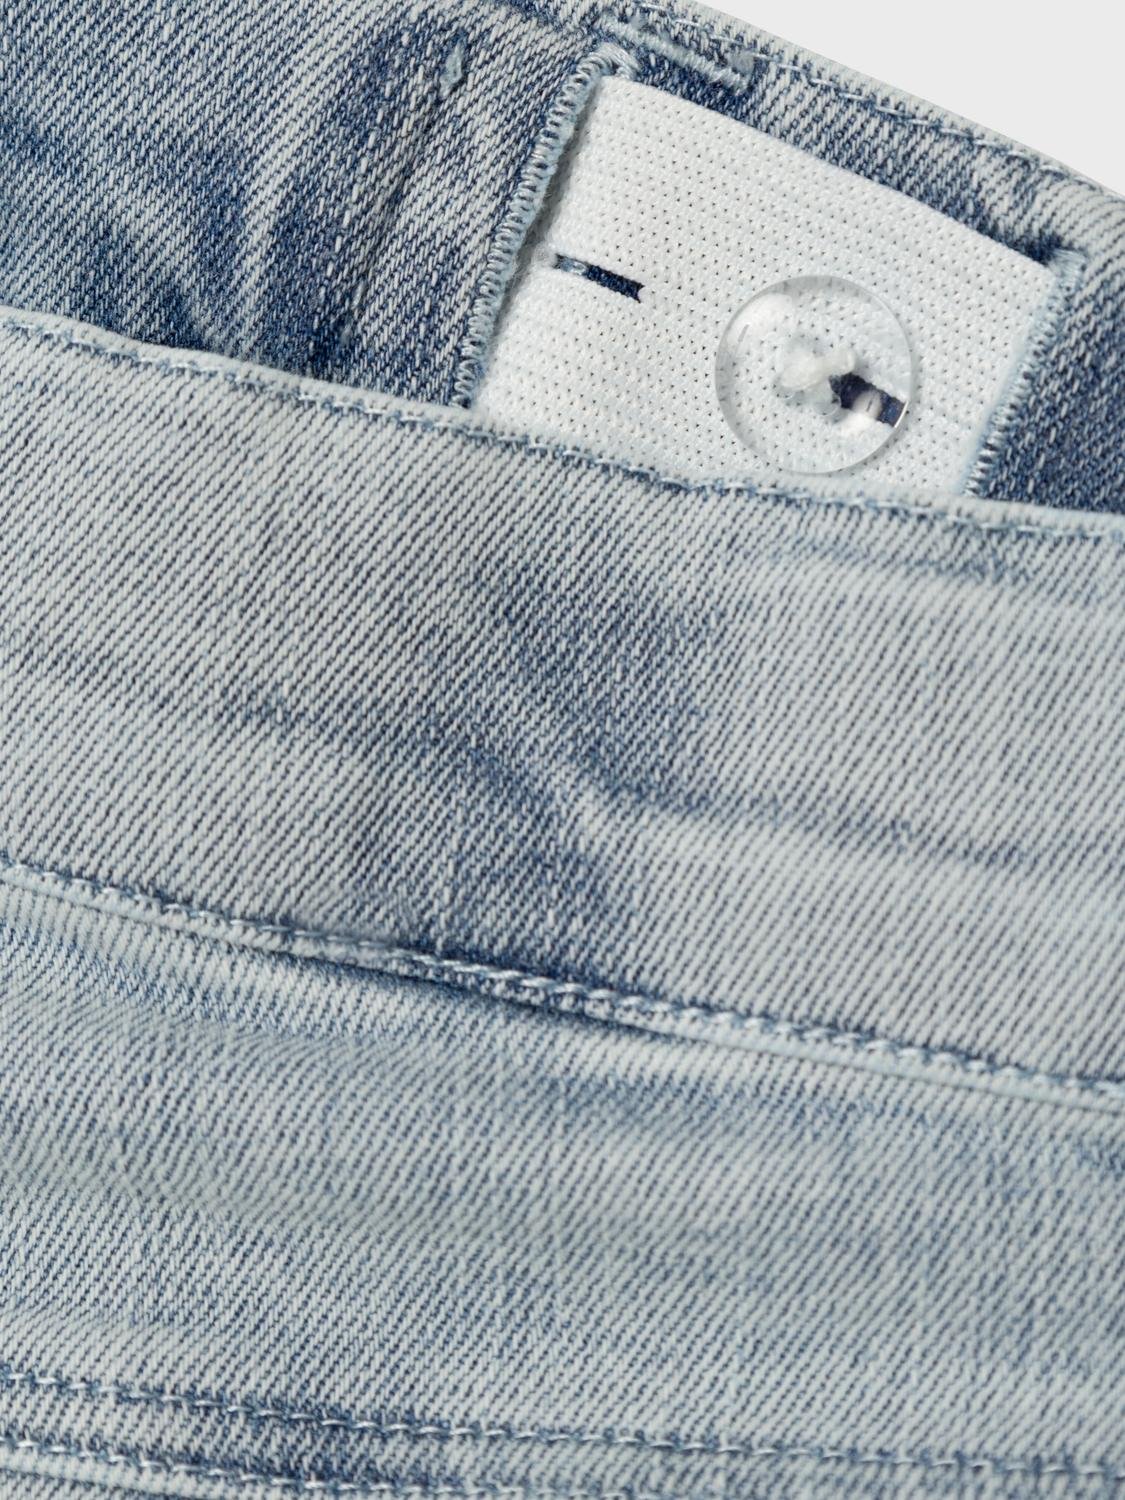 Lil atelier - Jeans tapered - Light medium denim